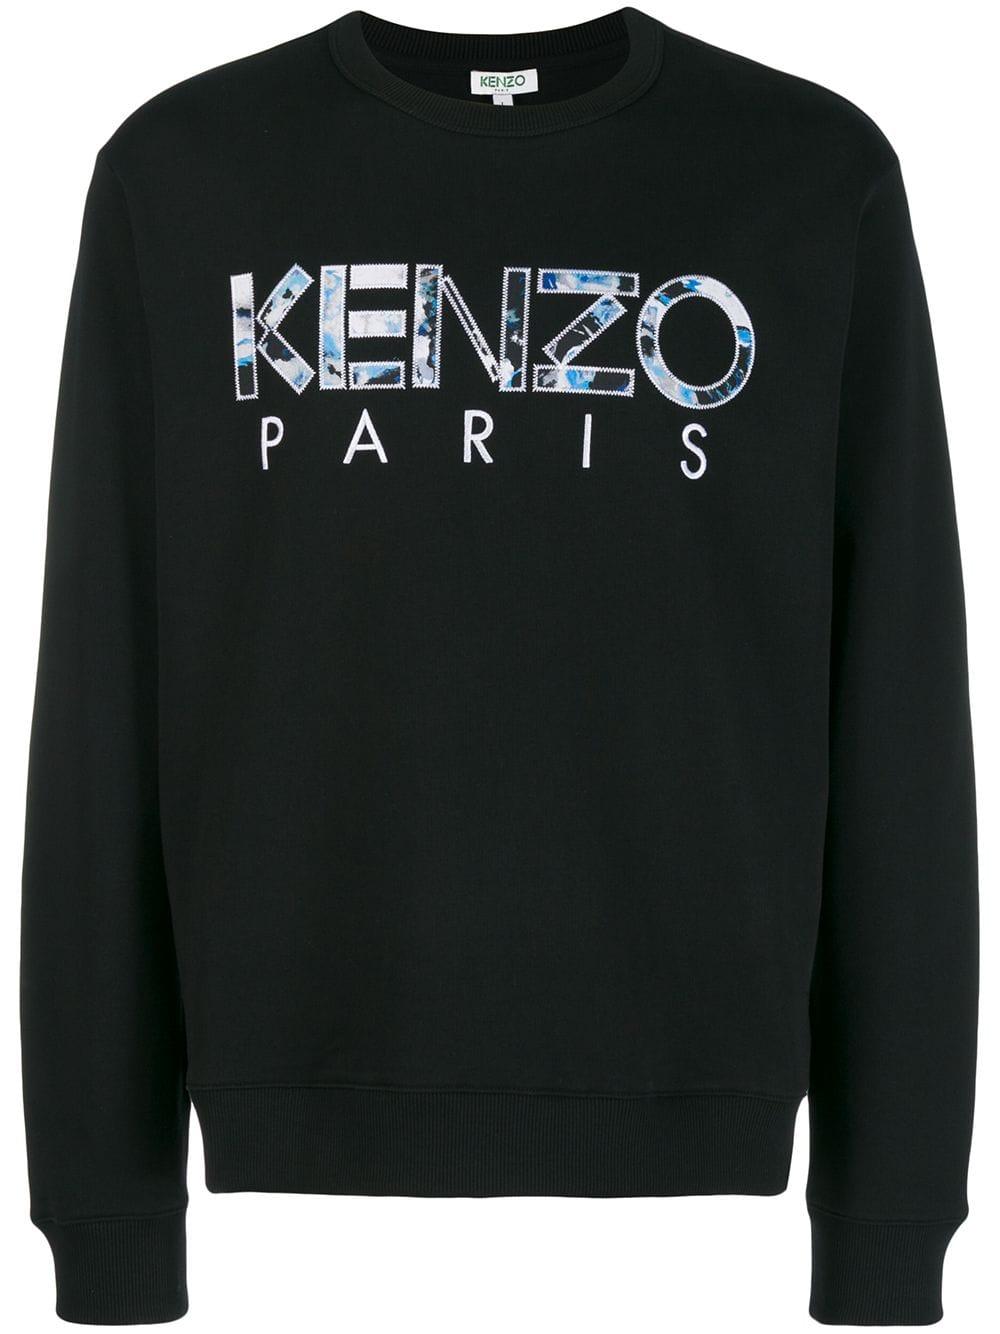 kenzo paris sweatshirt black